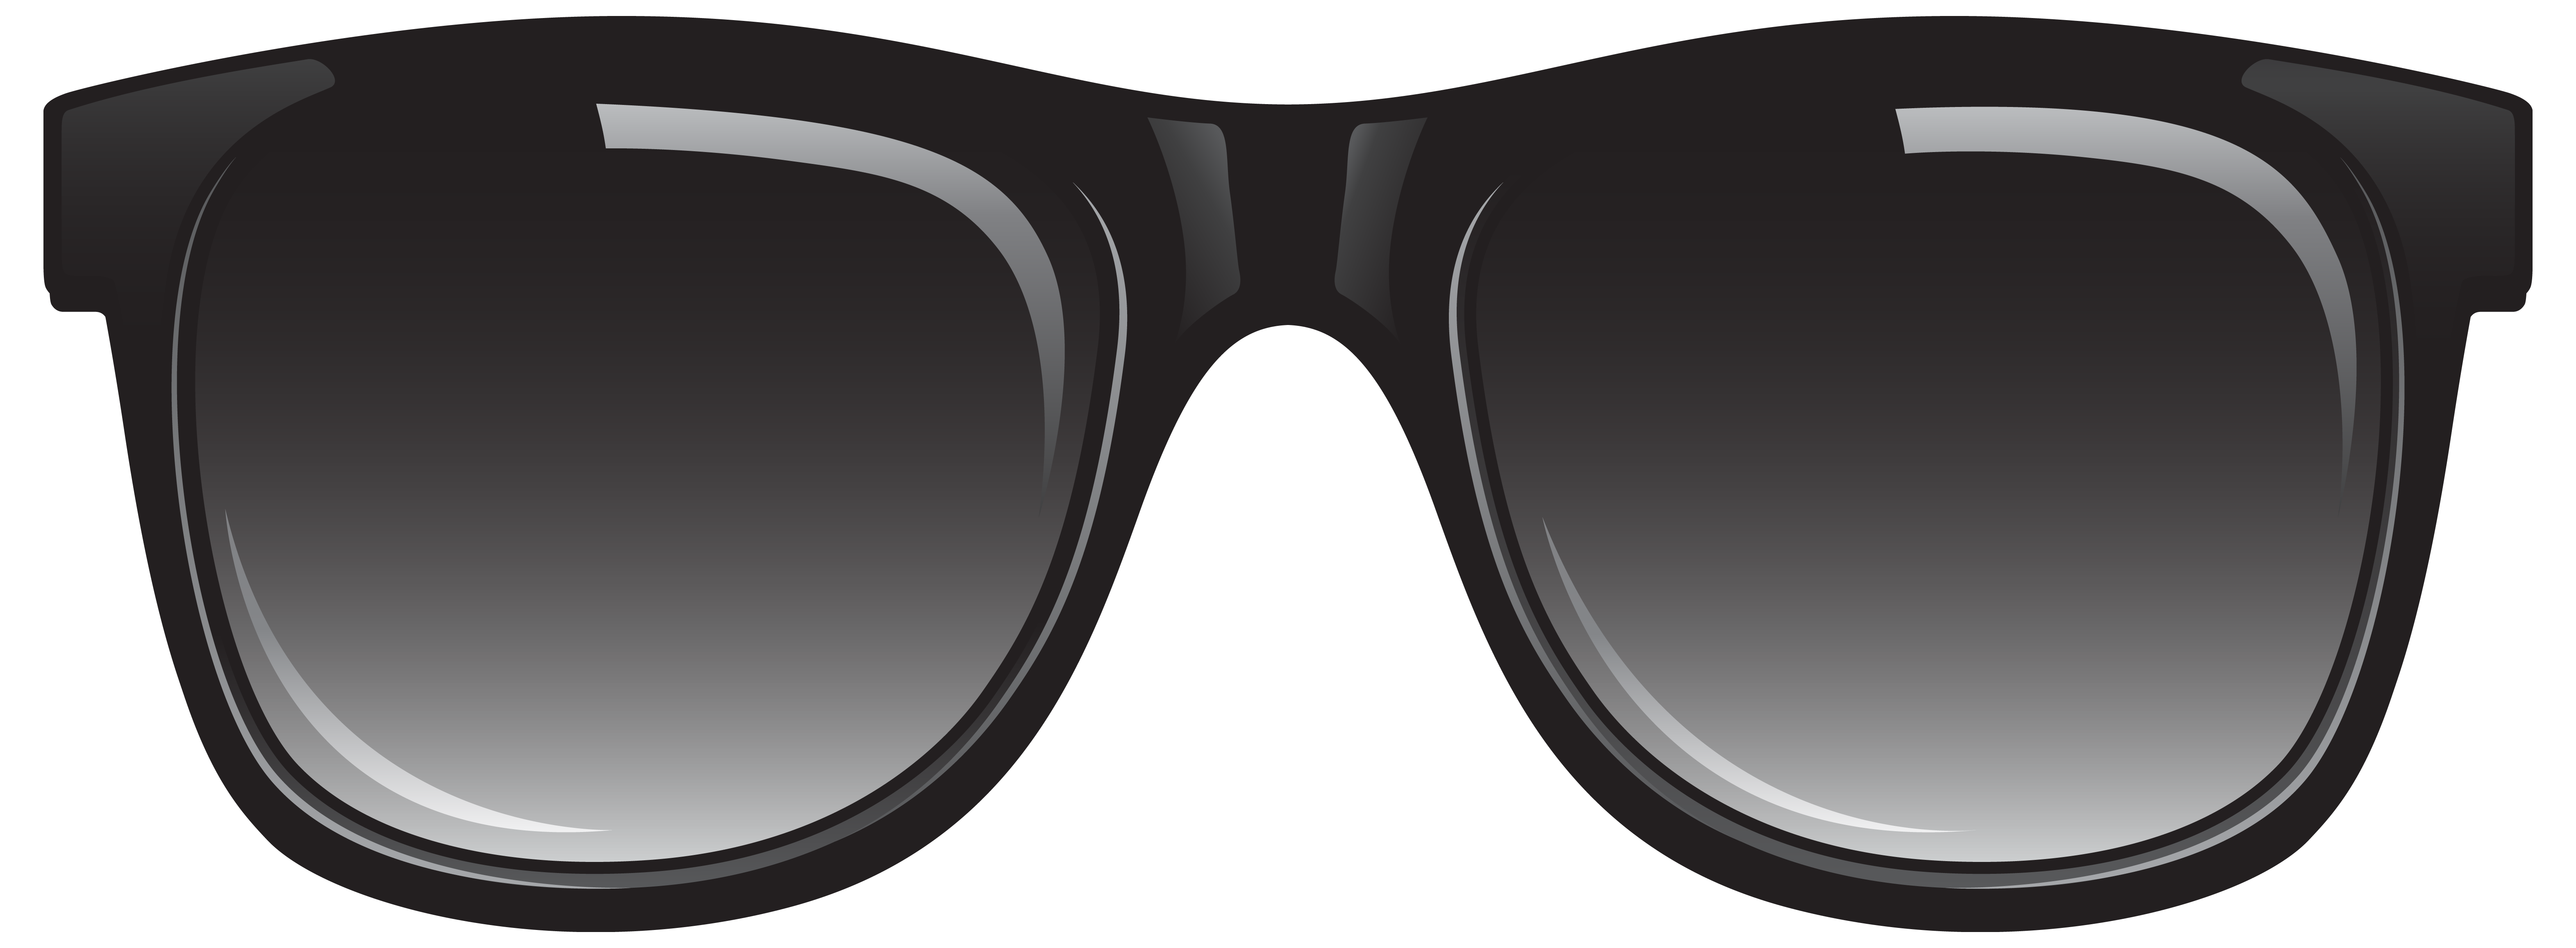 Black sunglasses png image. Goggles clipart stylish